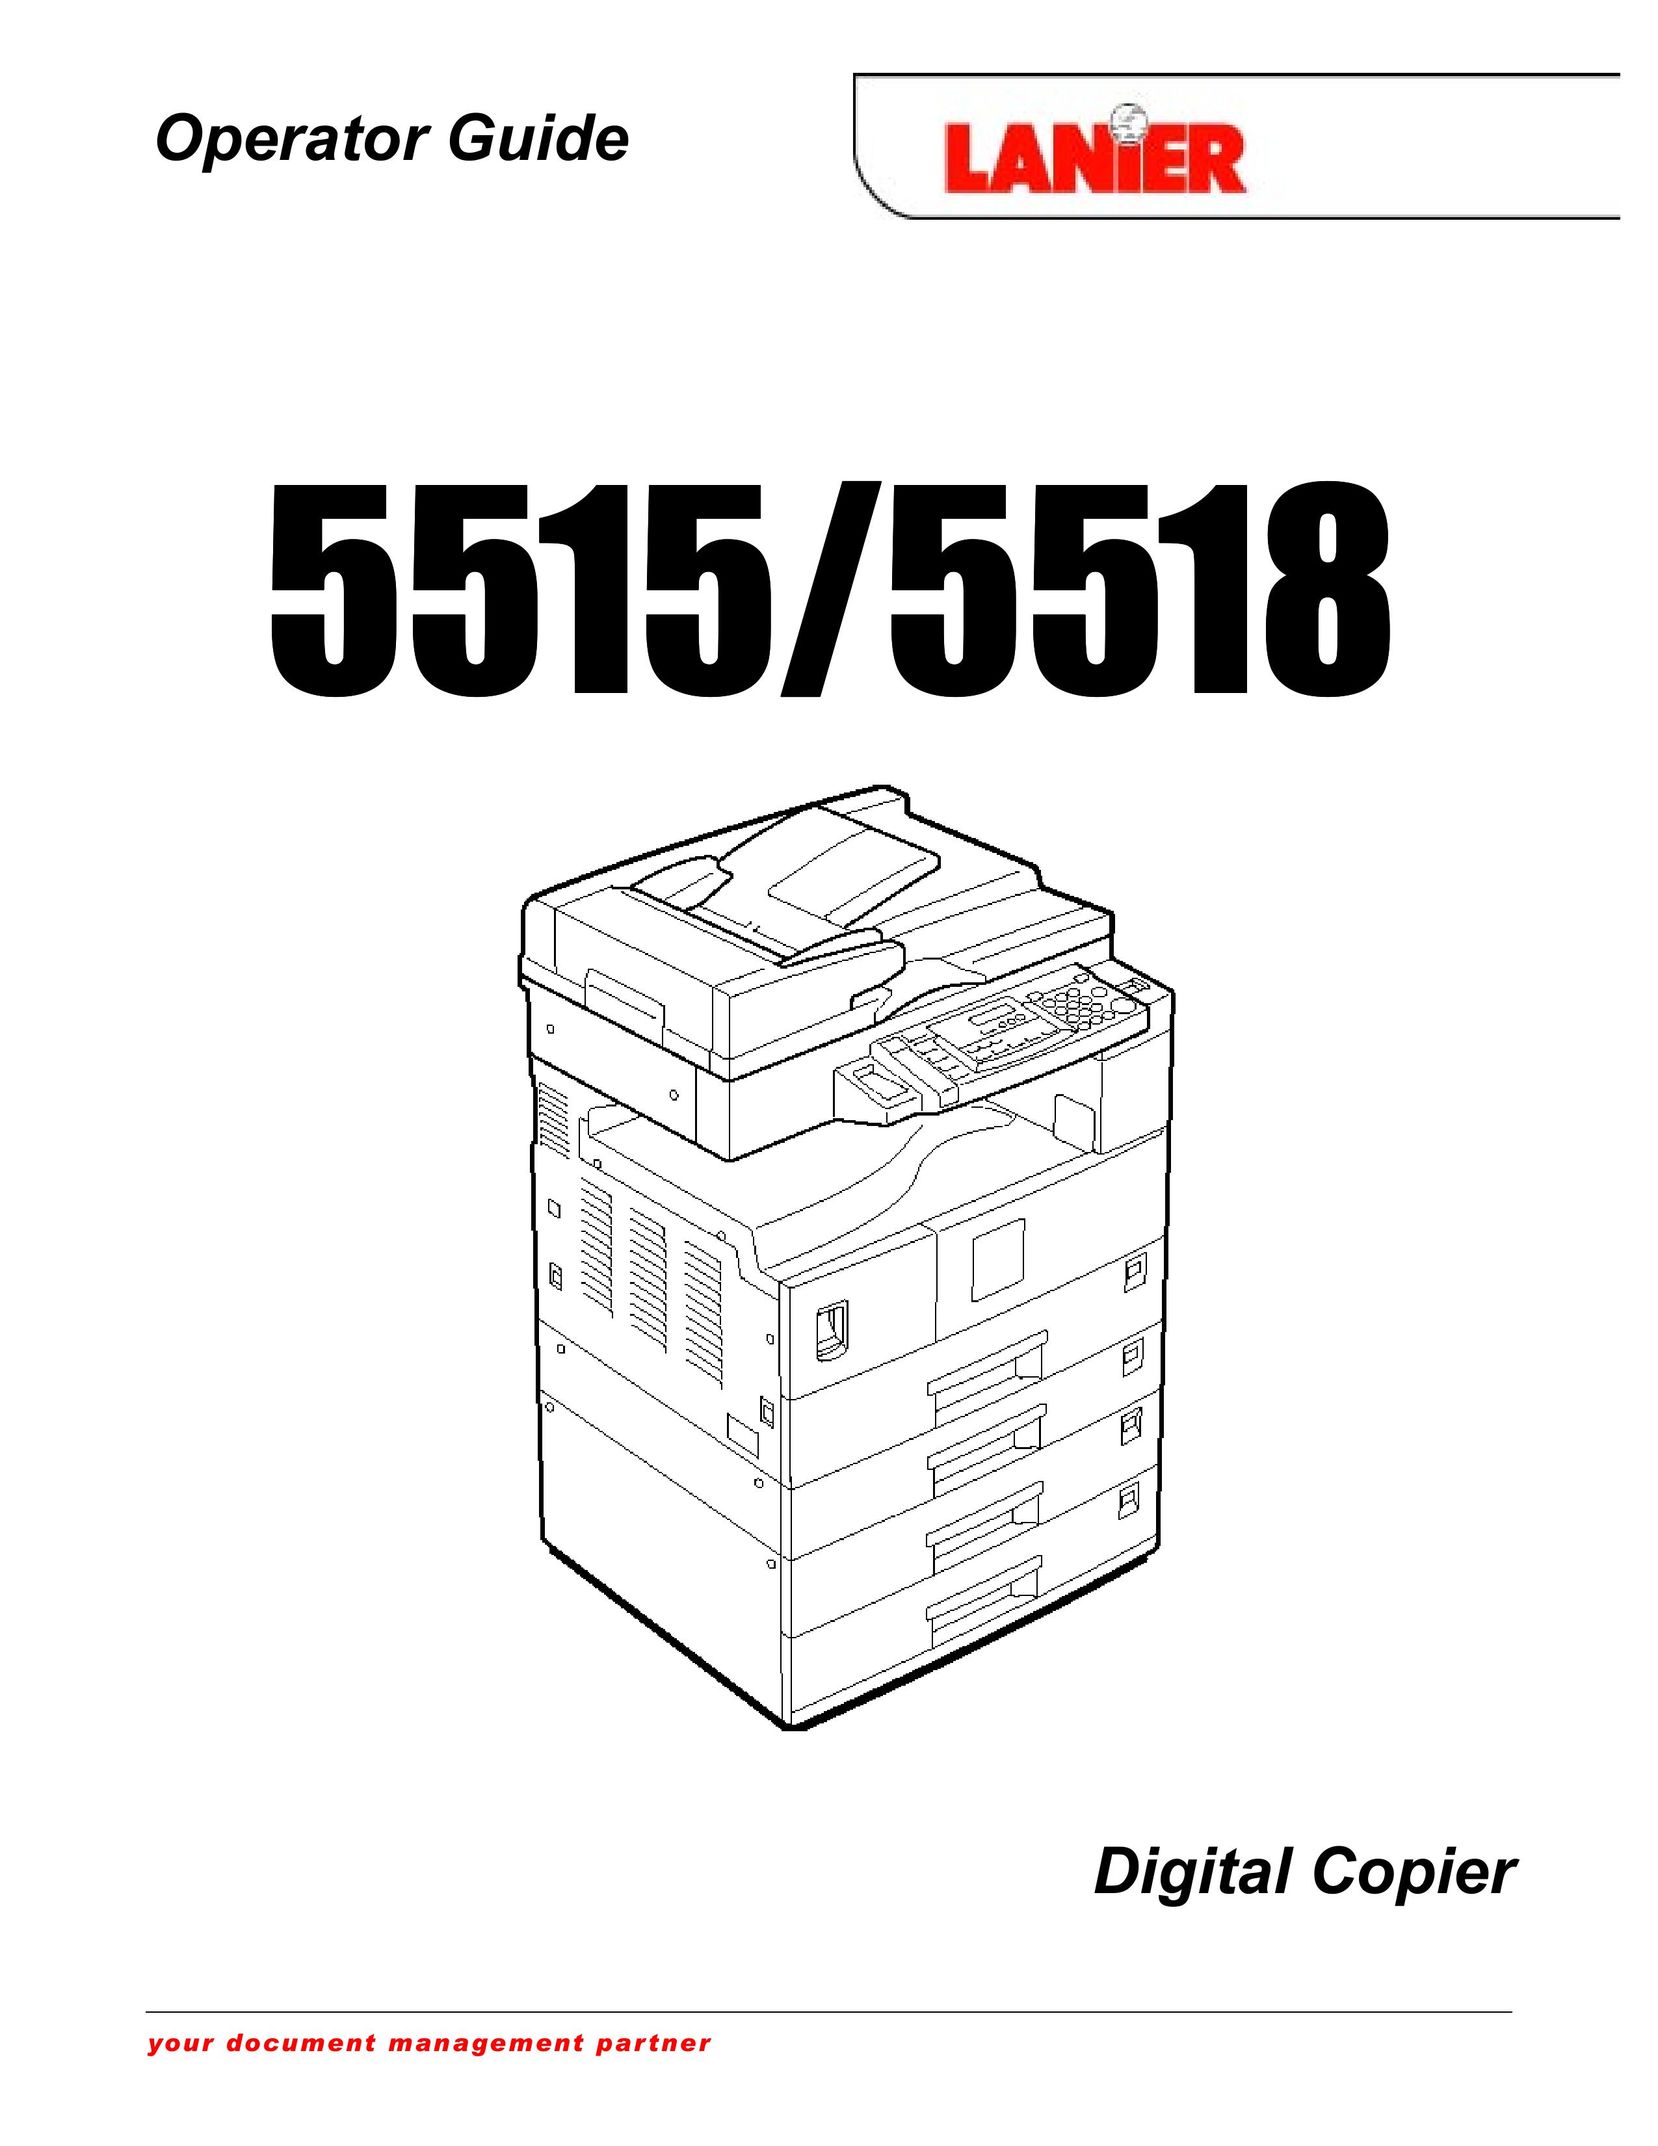 Lanier 5515 All in One Printer User Manual